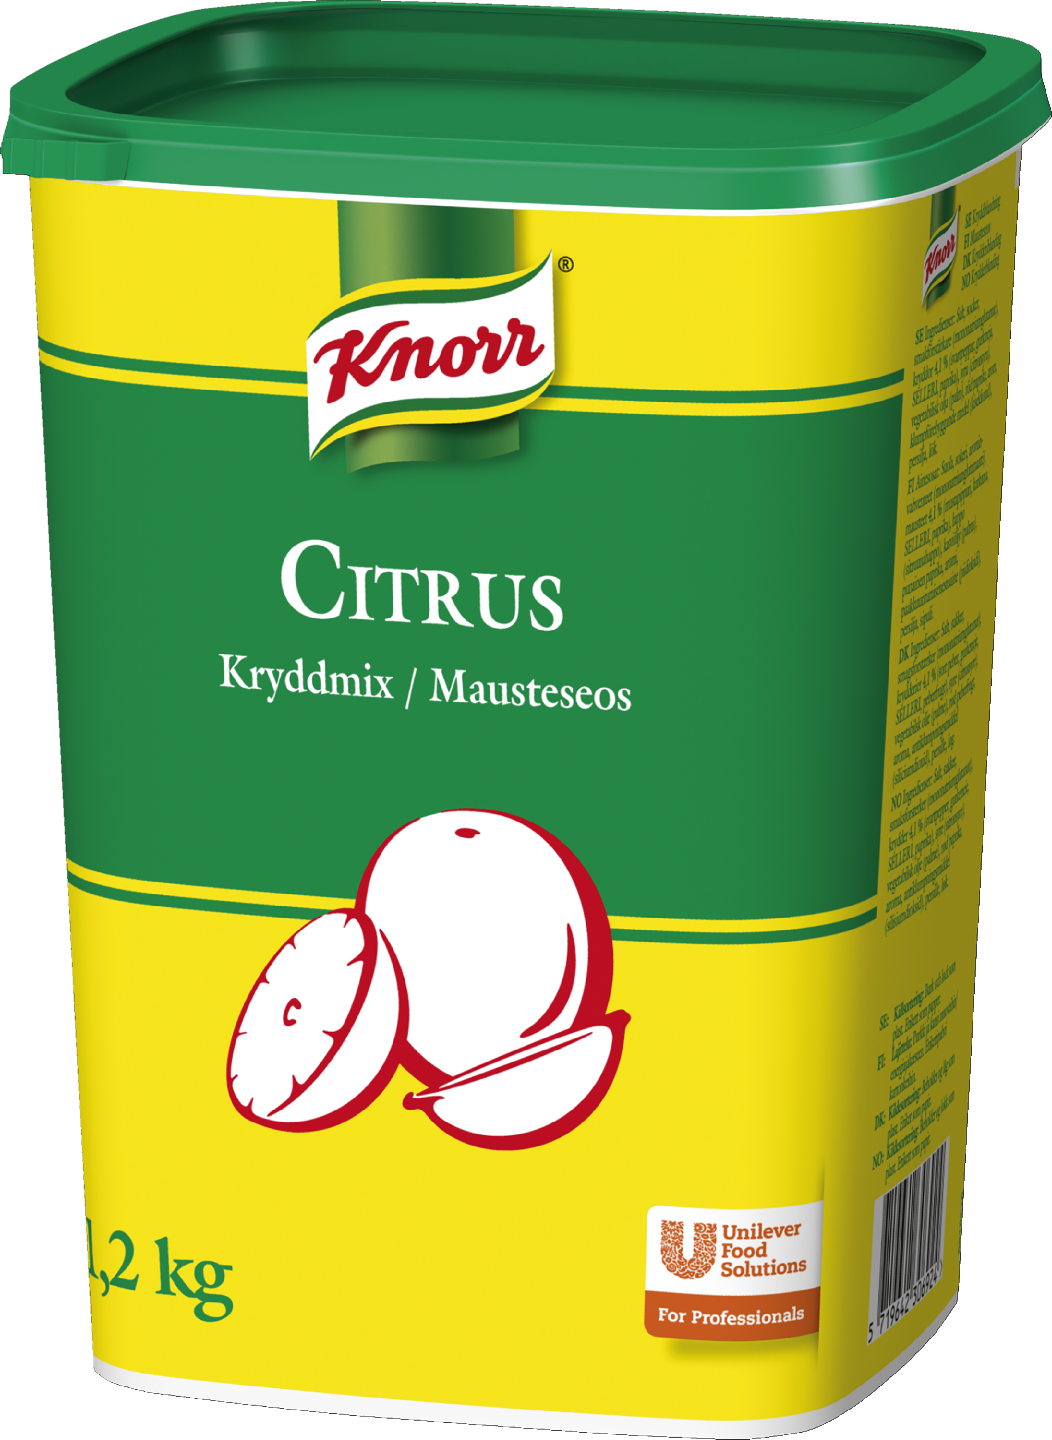 Knorr Citrusmauste 1,2kg